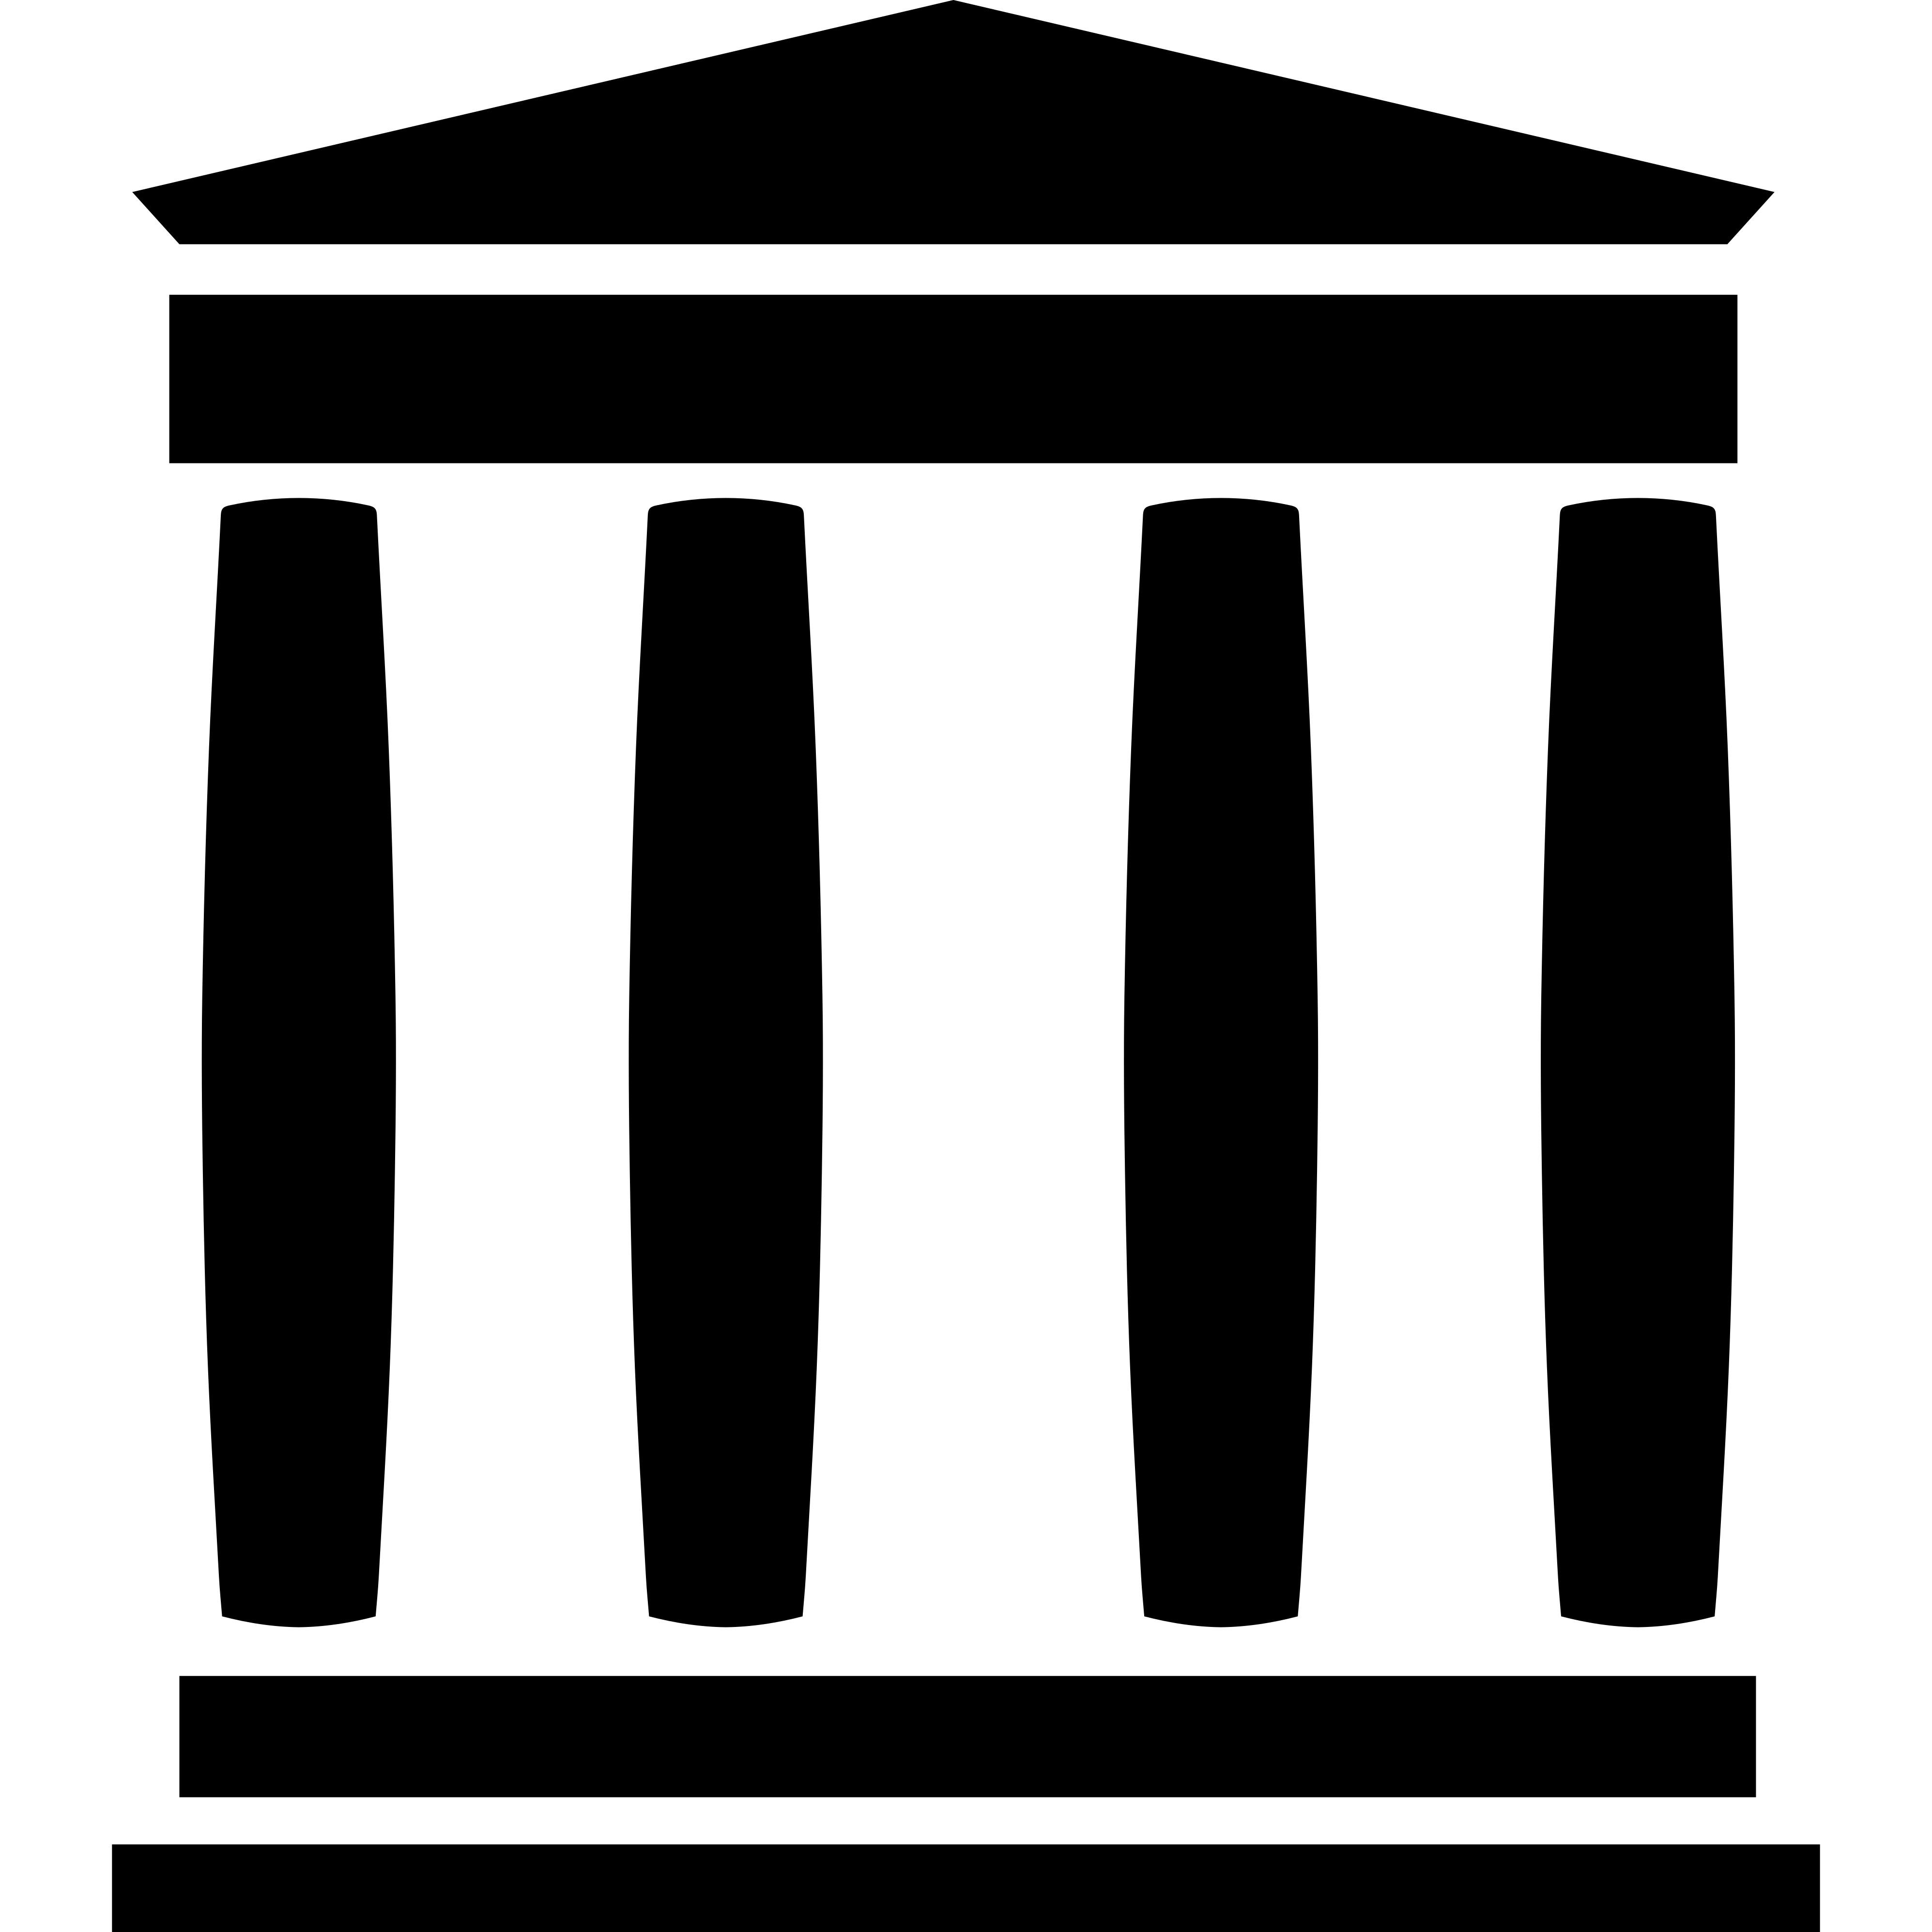 Archive org. Internet Archive. Internet Archive logo. Archive логотип. Веб архив лого.